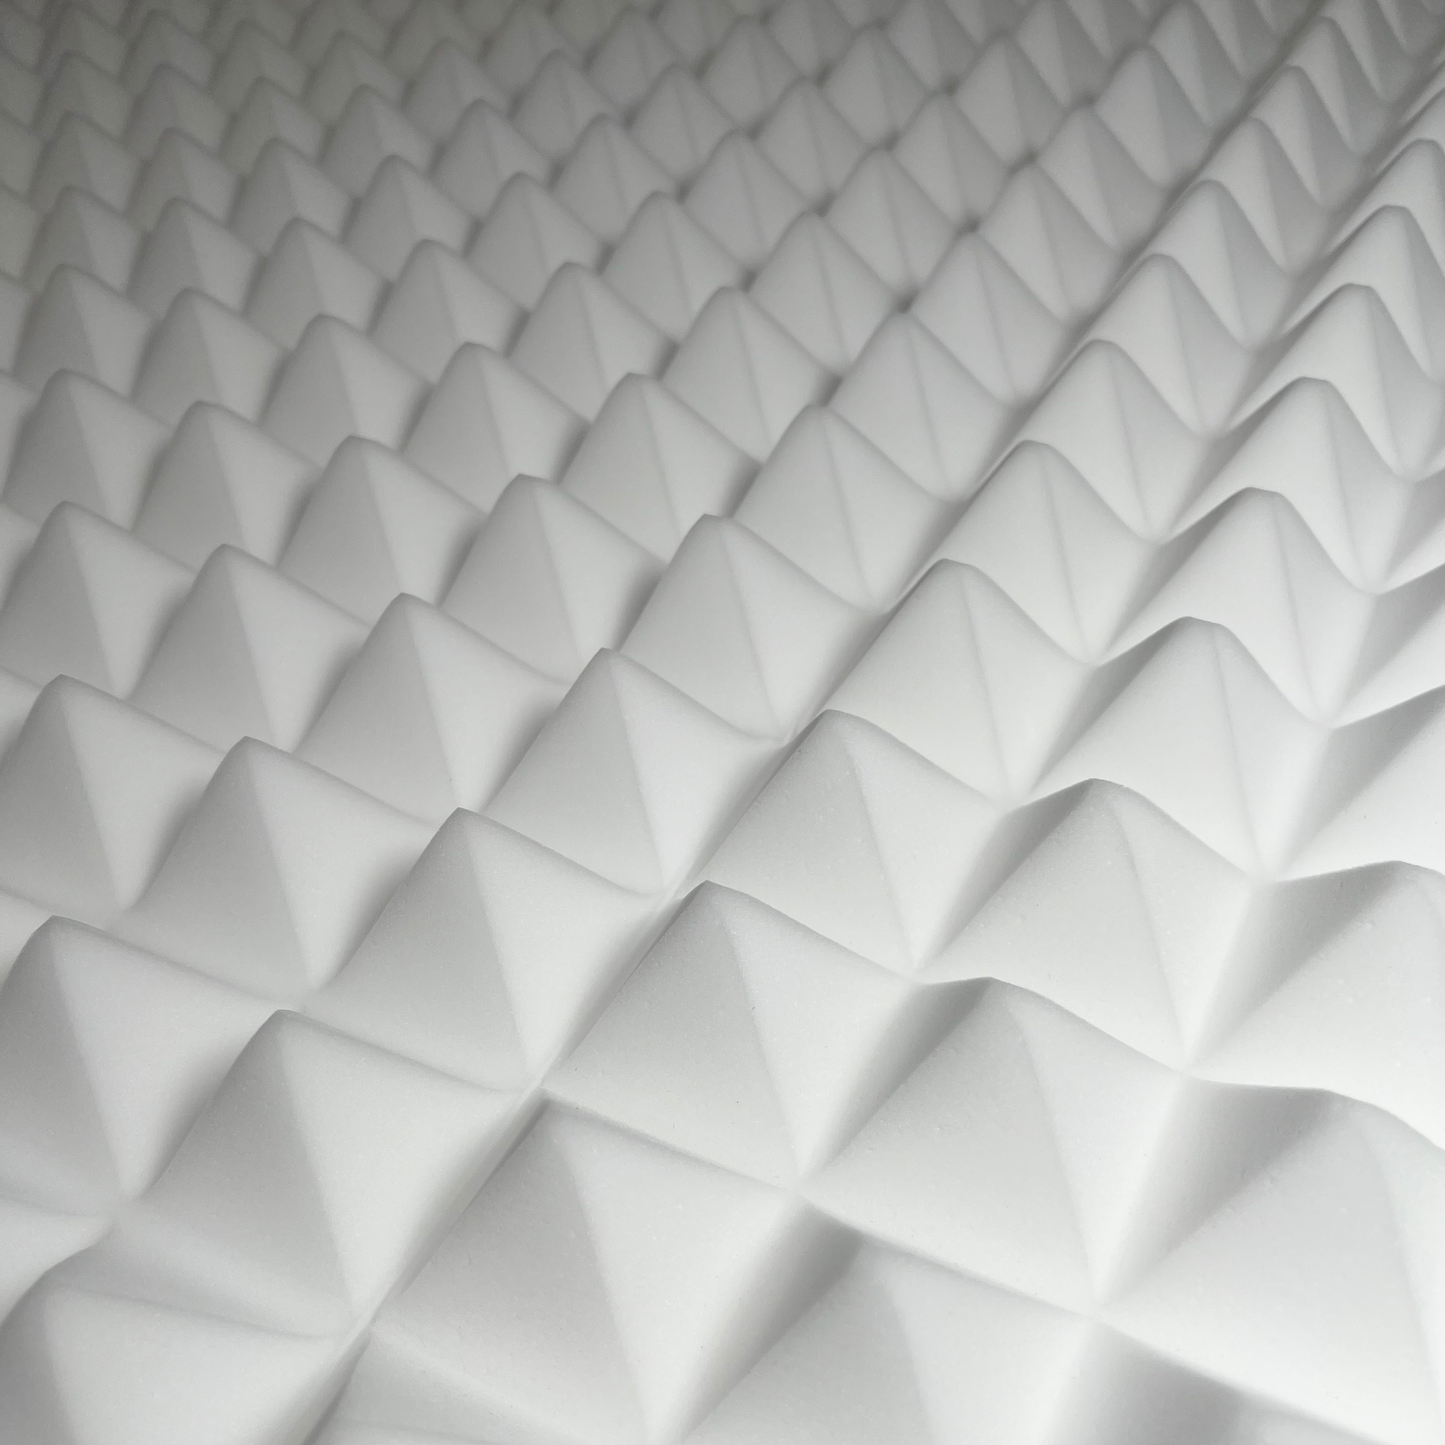 White Acoustic Foam Panels - 12x12x2.5"